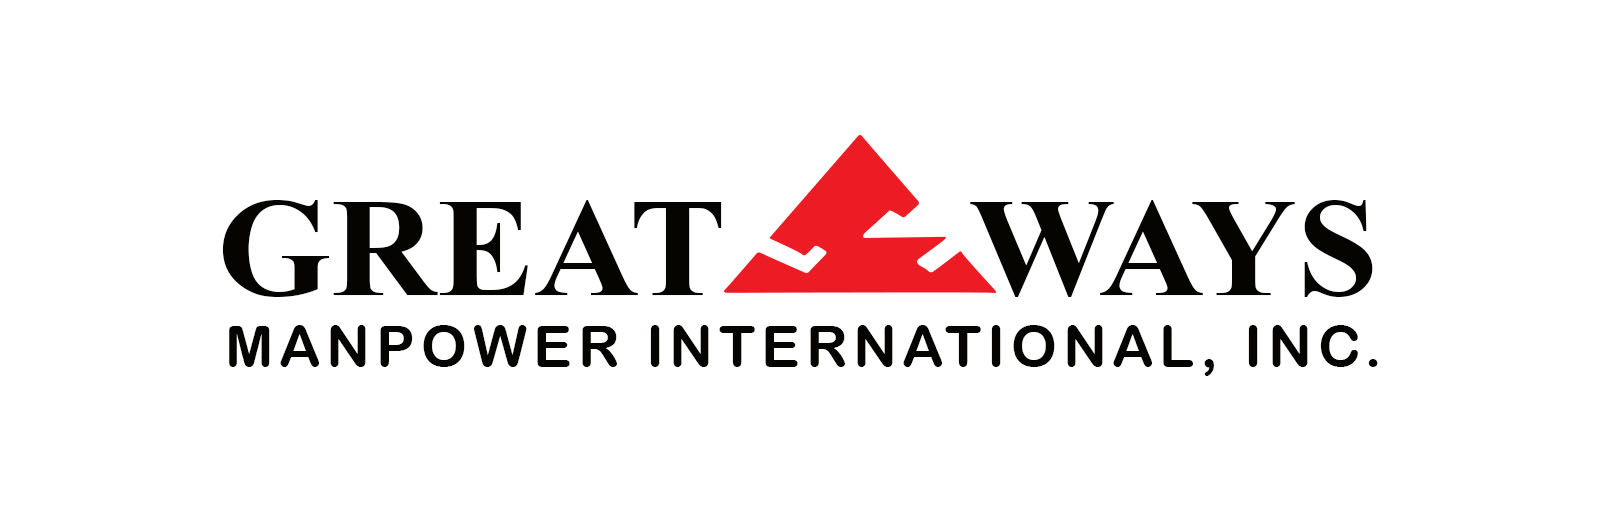 Greatways logo high resolution